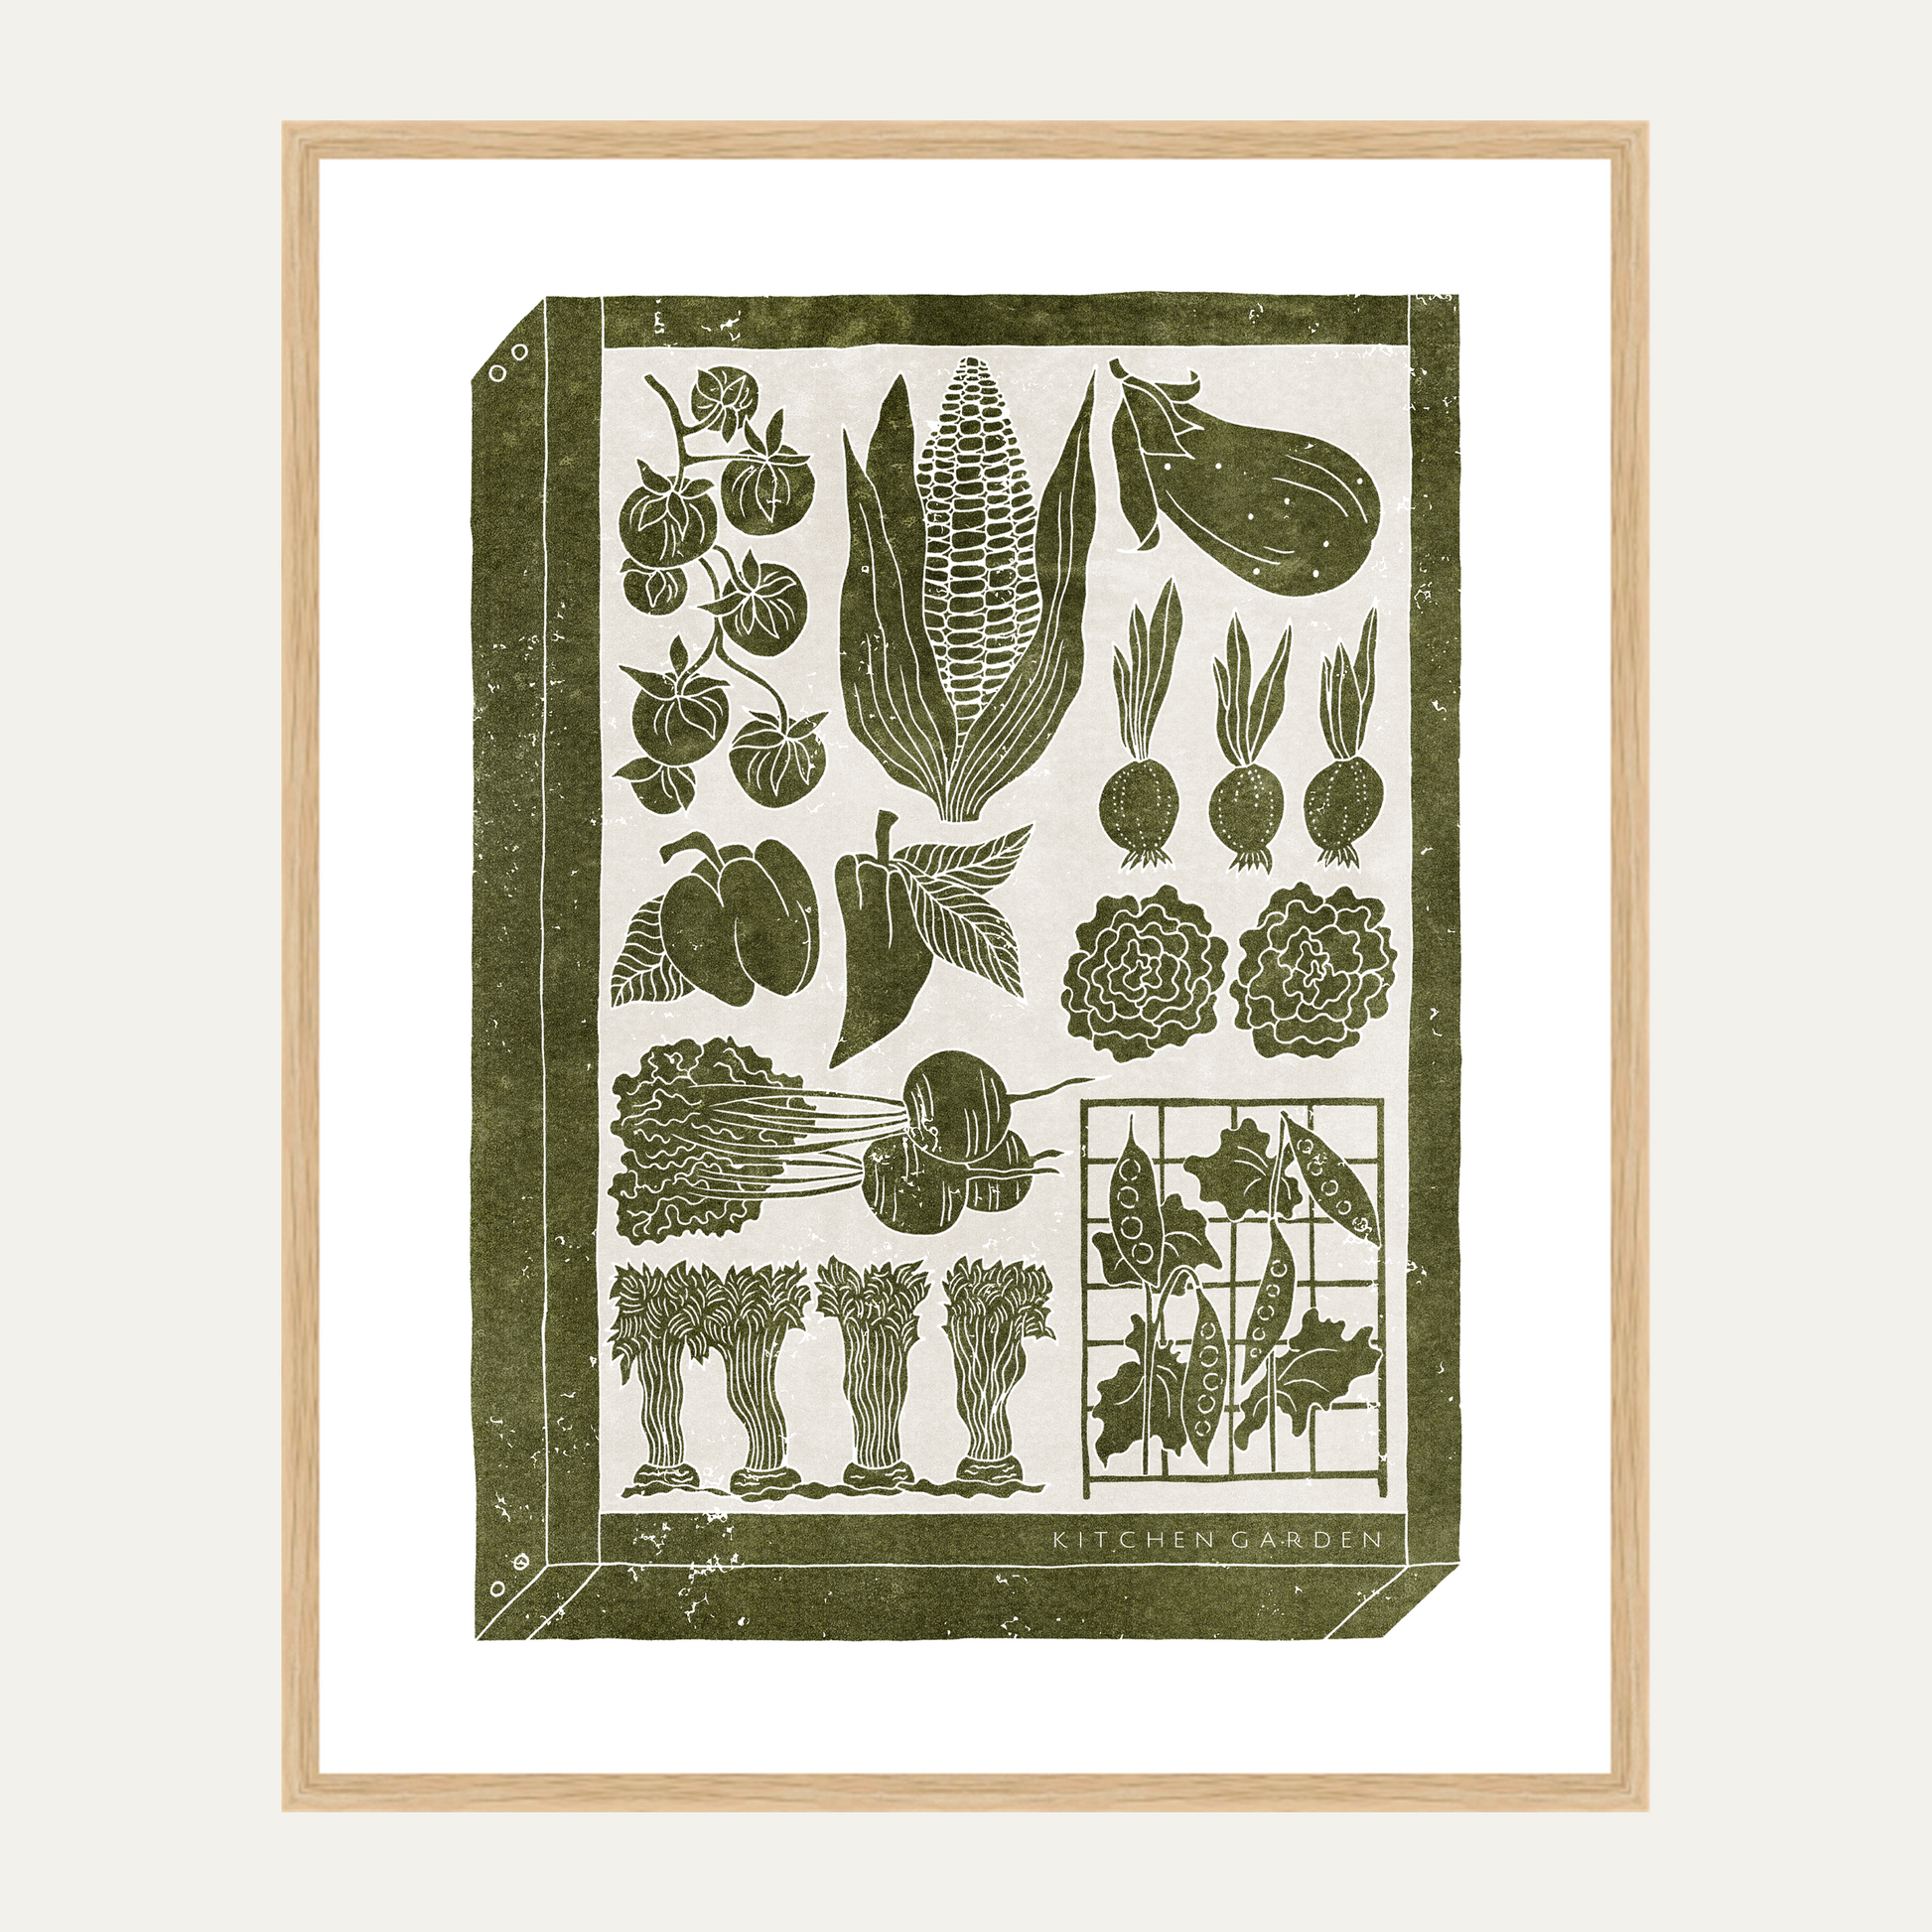 Home Decor Print - Nature-inspired Prints - Kitchen Garden - Framed - Linocut Effect Illustration - Green